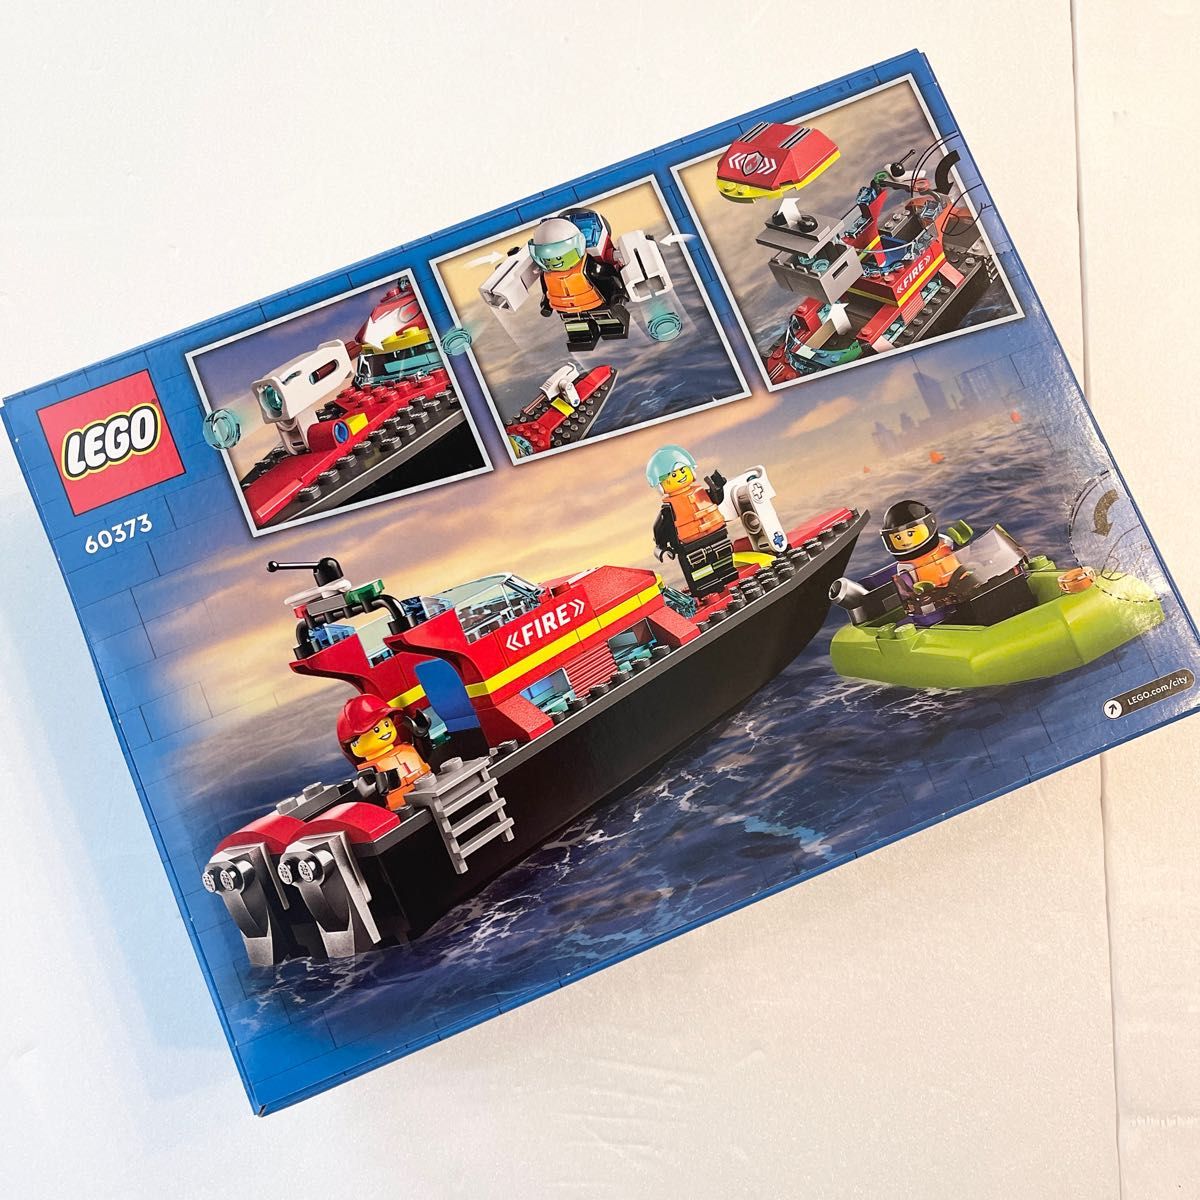 LEGO レゴ レゴシティ CITY LEGOシティ　レゴ(LEGO) シティ 消防レスキューボート 60373